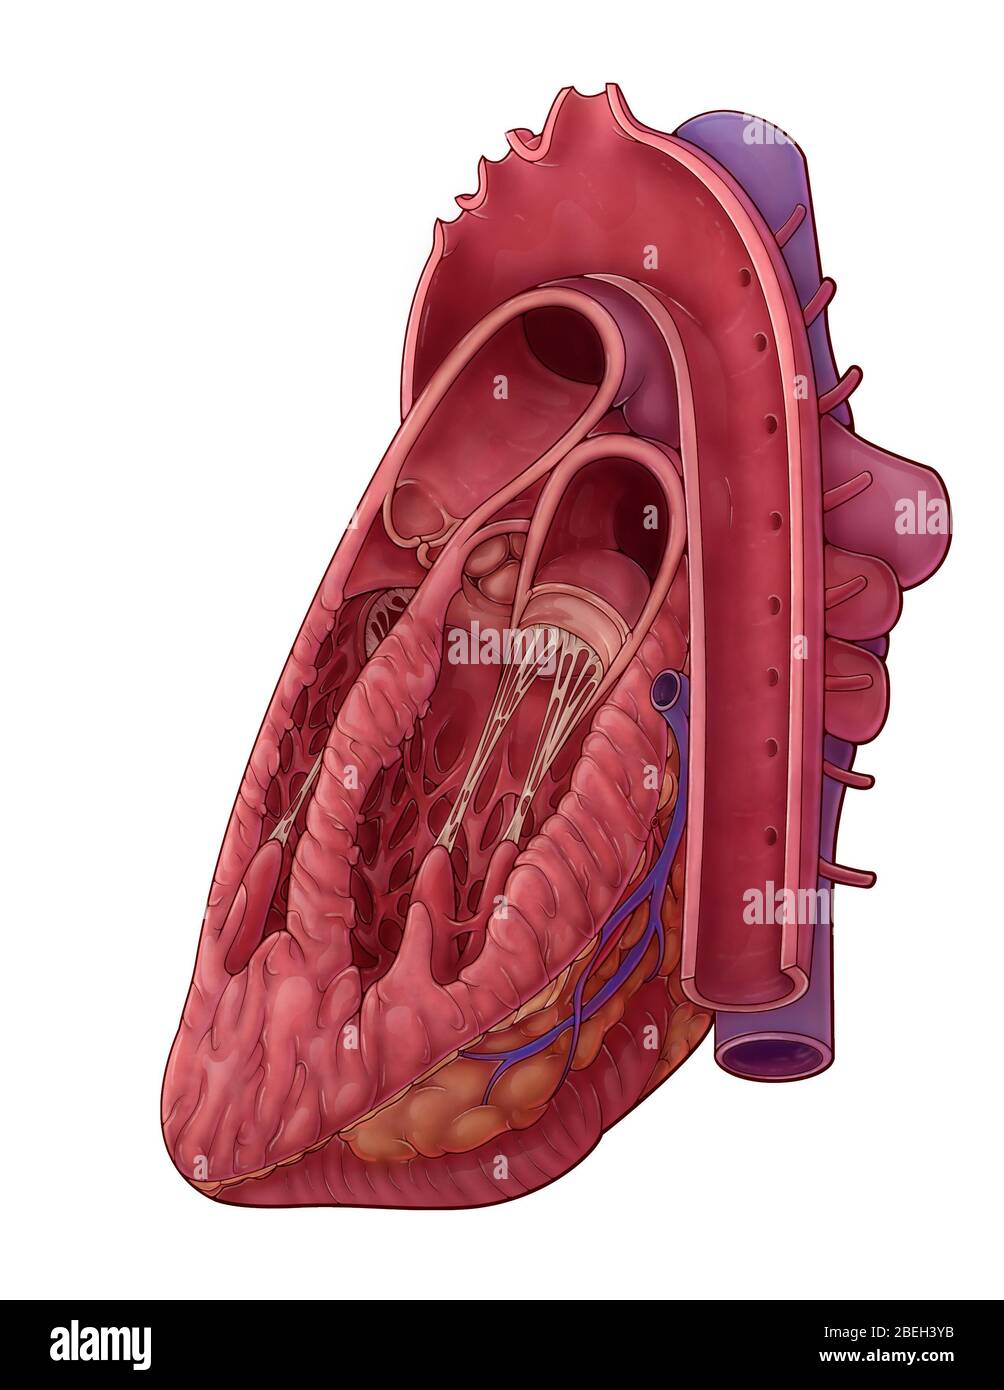 Herzquerschnitt, Illustration Stockfoto